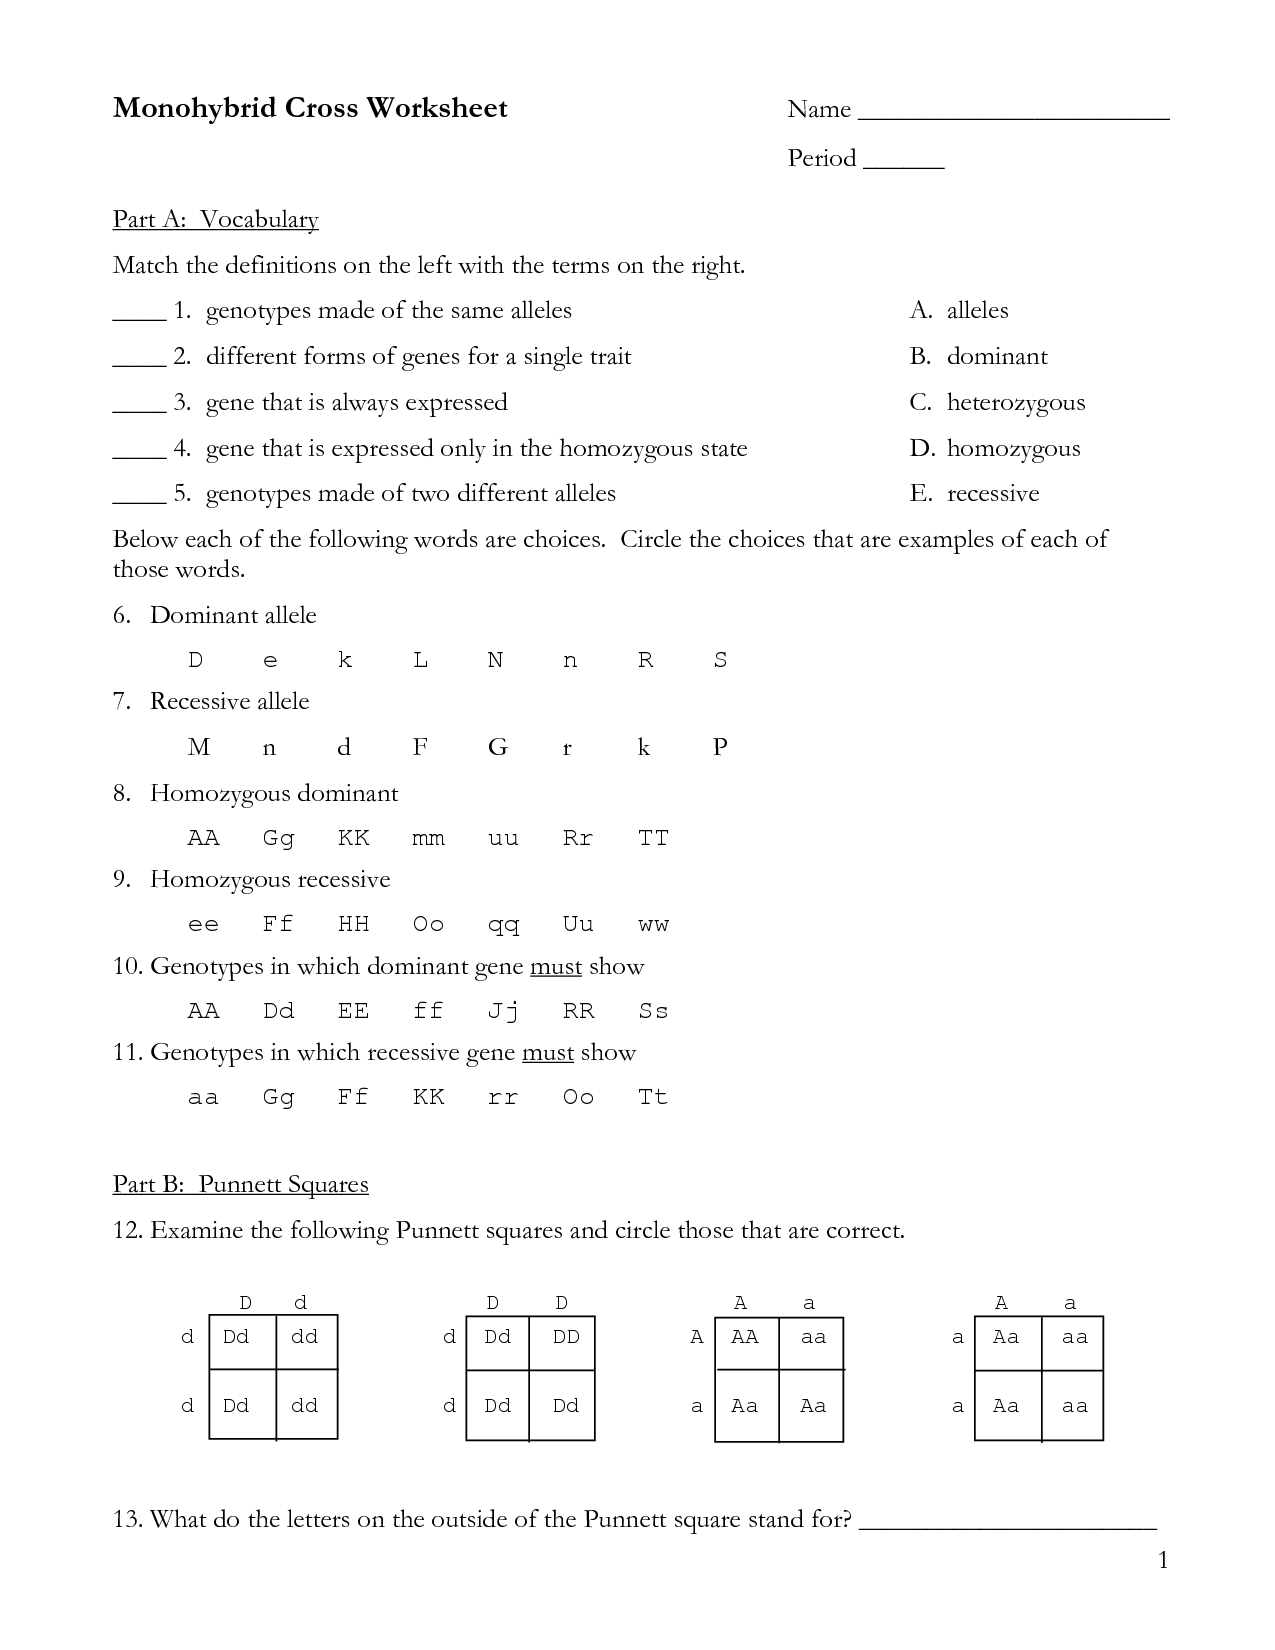 15-genetics-problems-worksheet-with-answer-keys-worksheeto